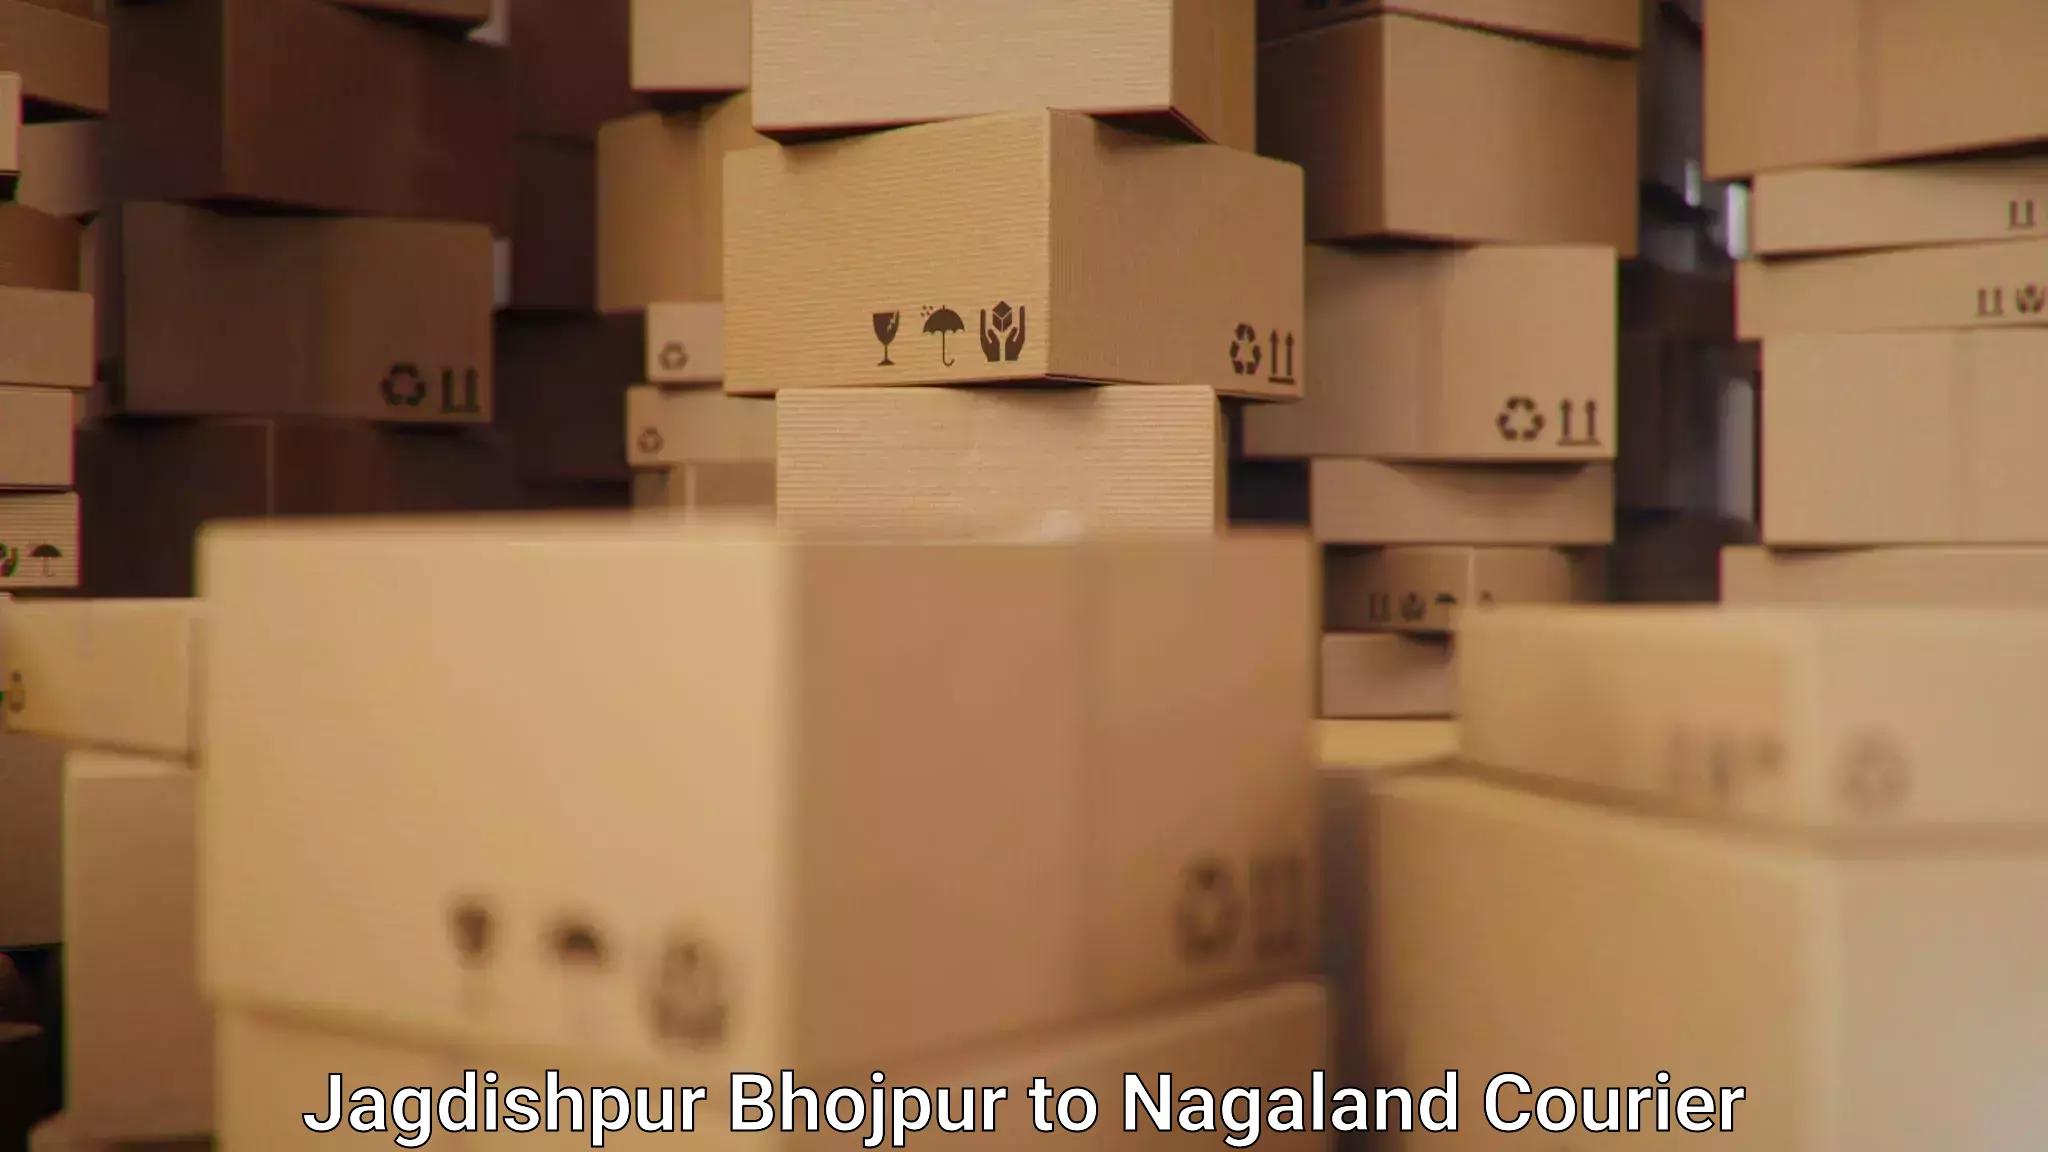 Tracking updates Jagdishpur Bhojpur to Nagaland